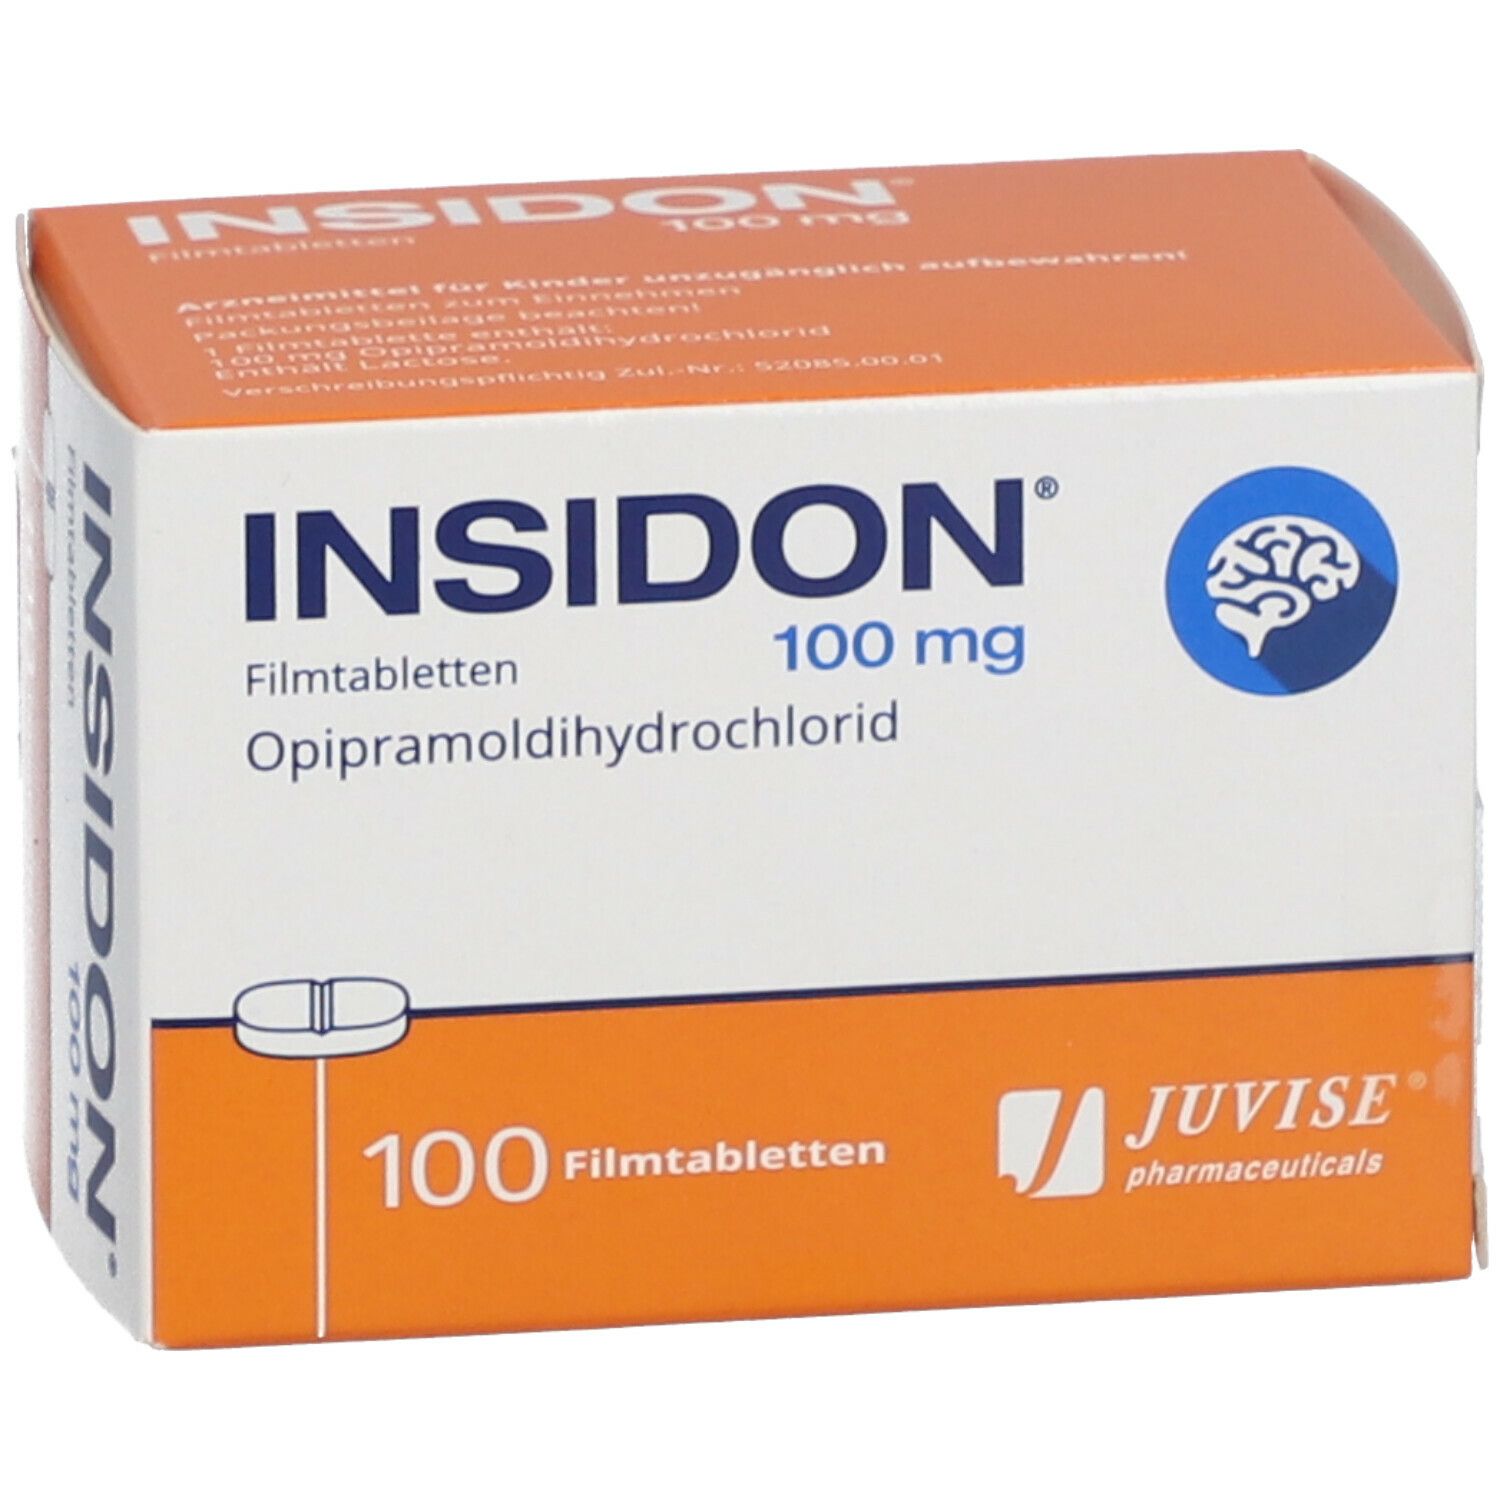 INSIDON® 100 mg